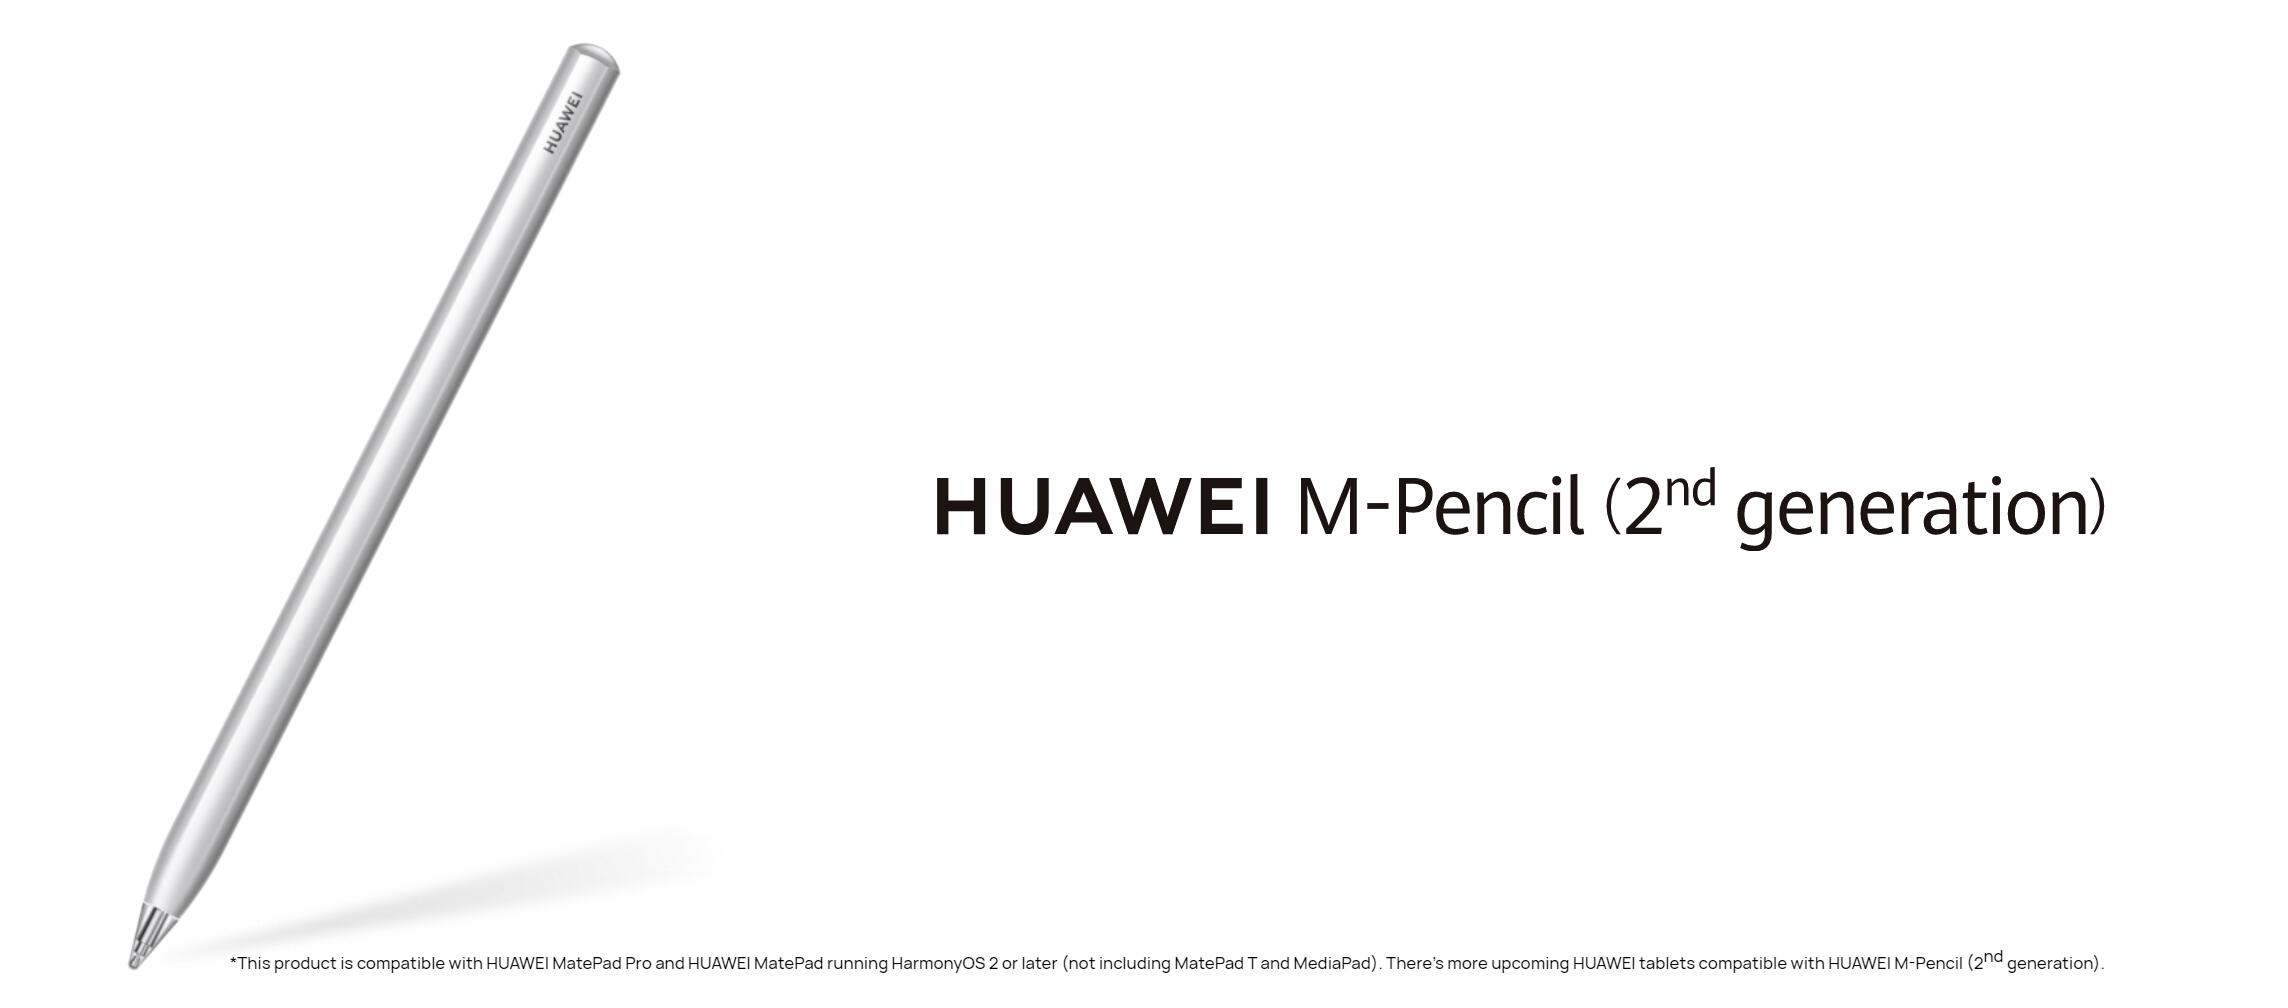 HUAWEI-M-Pencil-2nd_generation-01.jpg